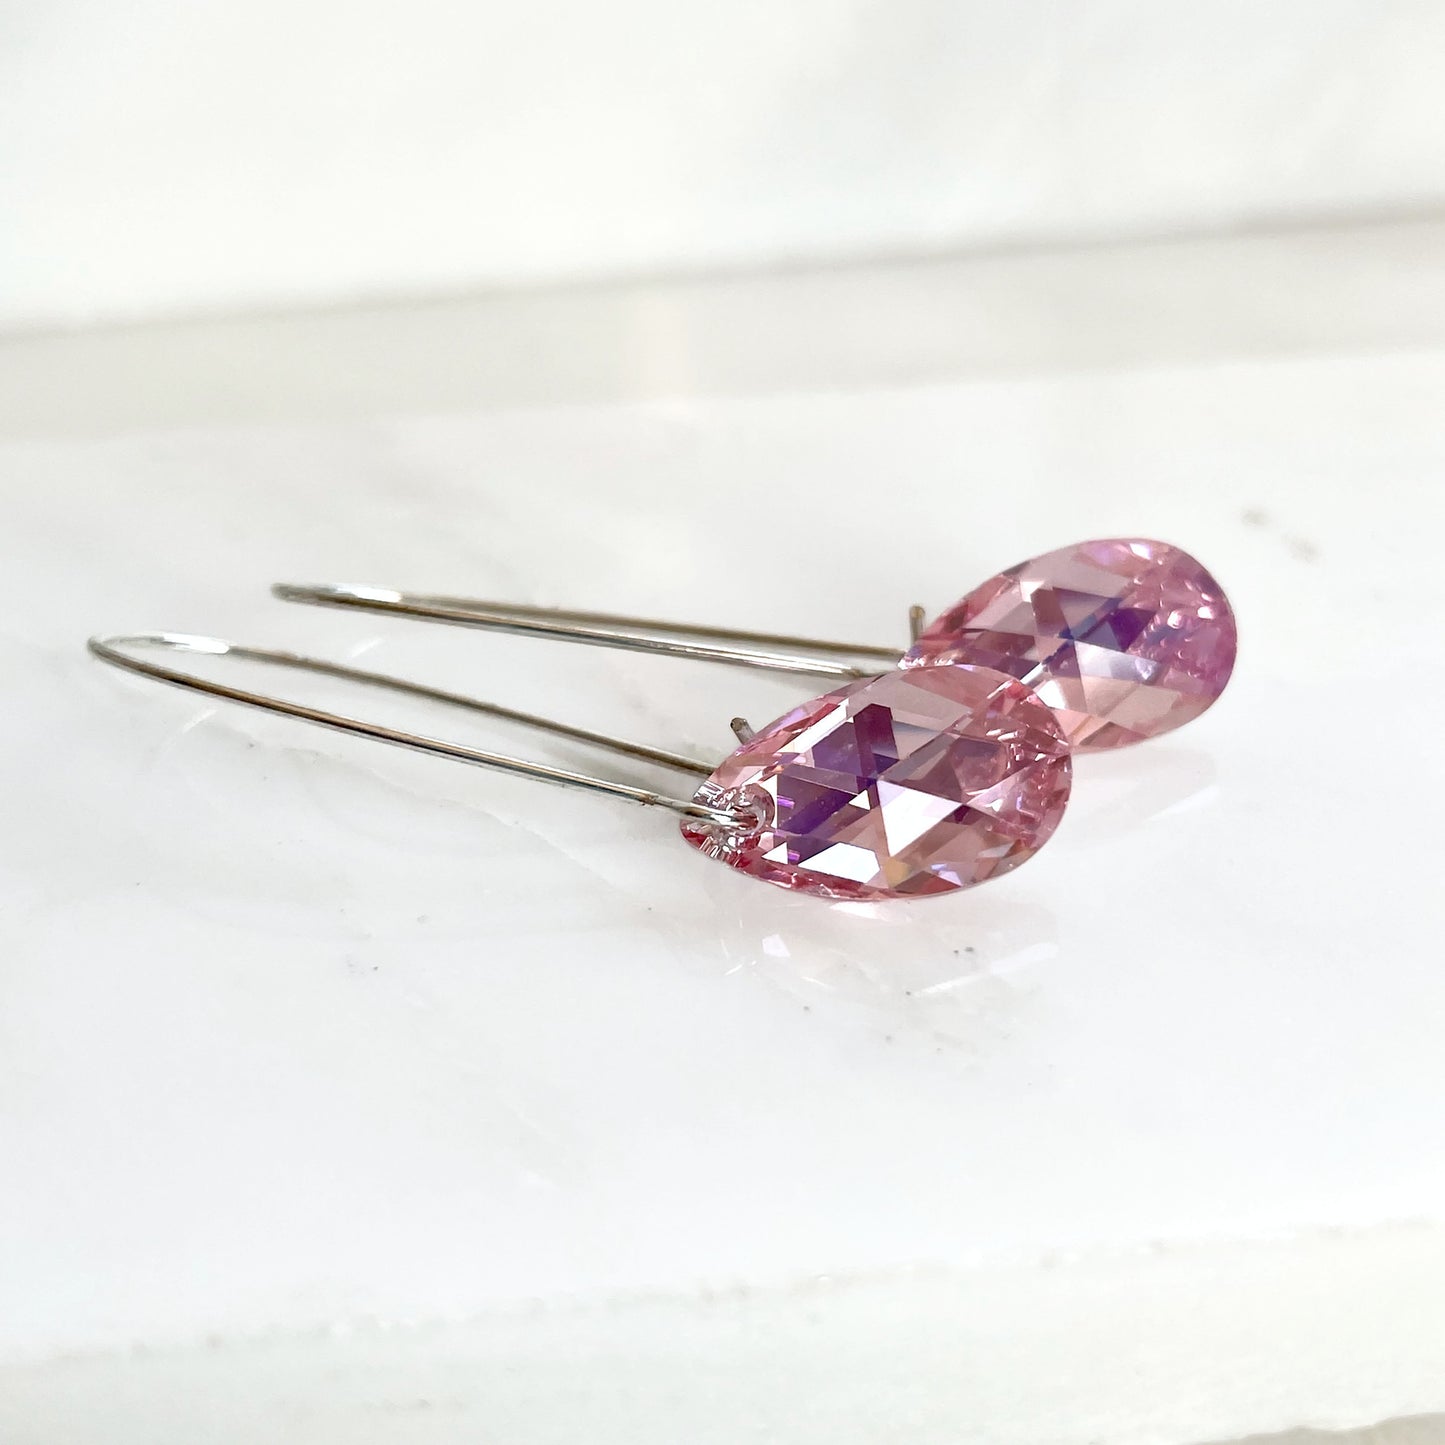 Long iridescent pink crystal teardrop earrings